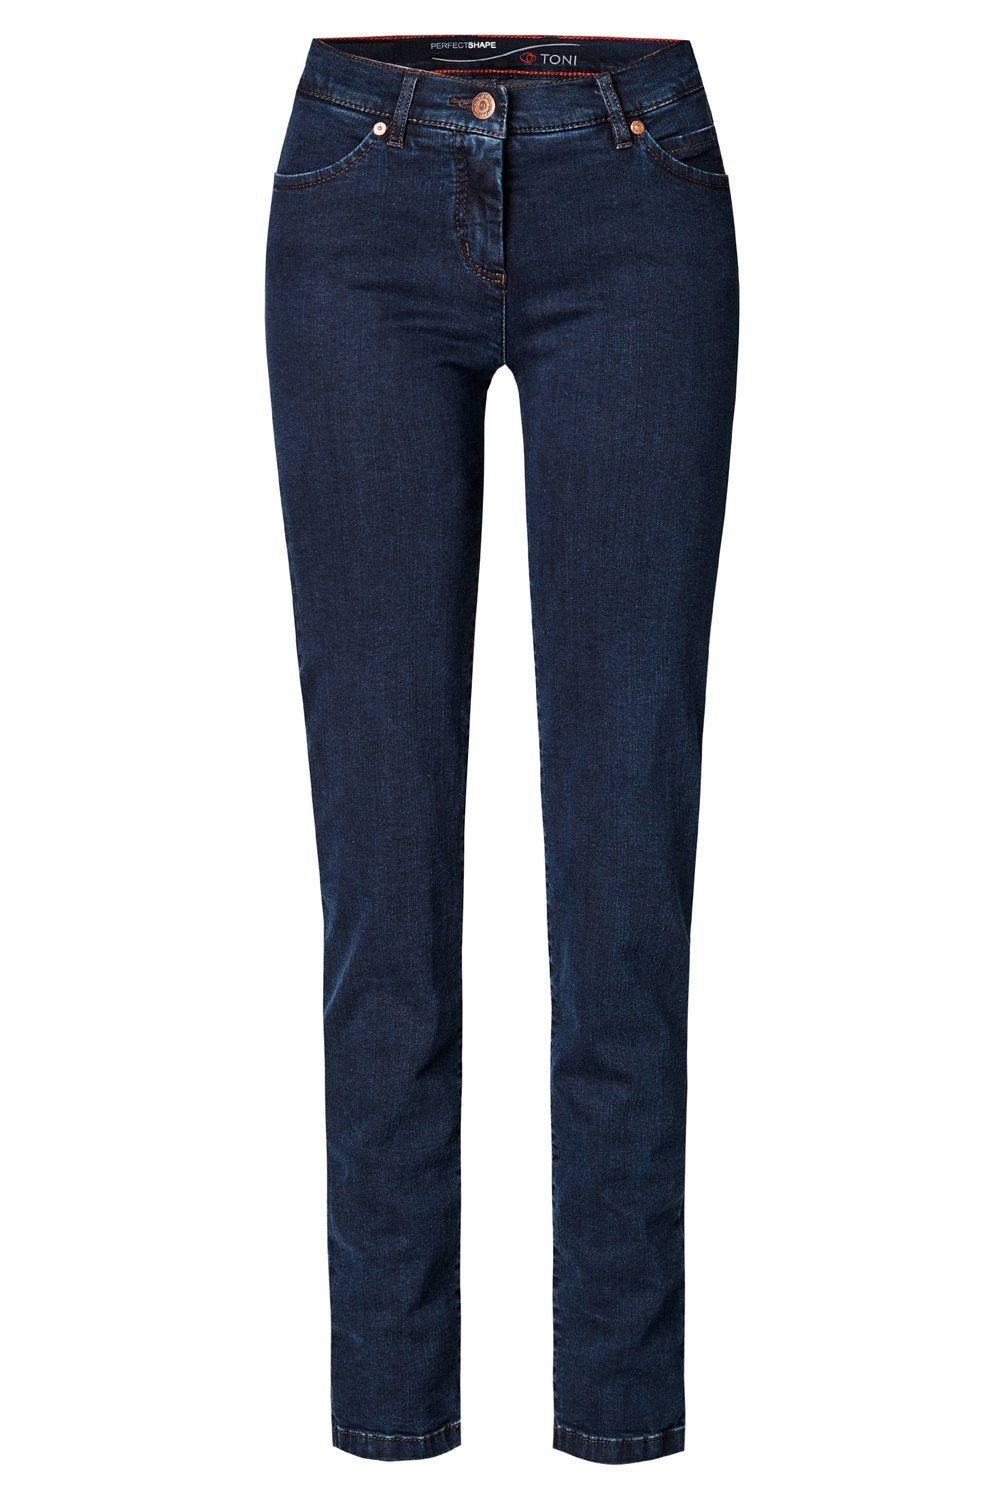 TONI 5-Pocket-Jeans dark blue